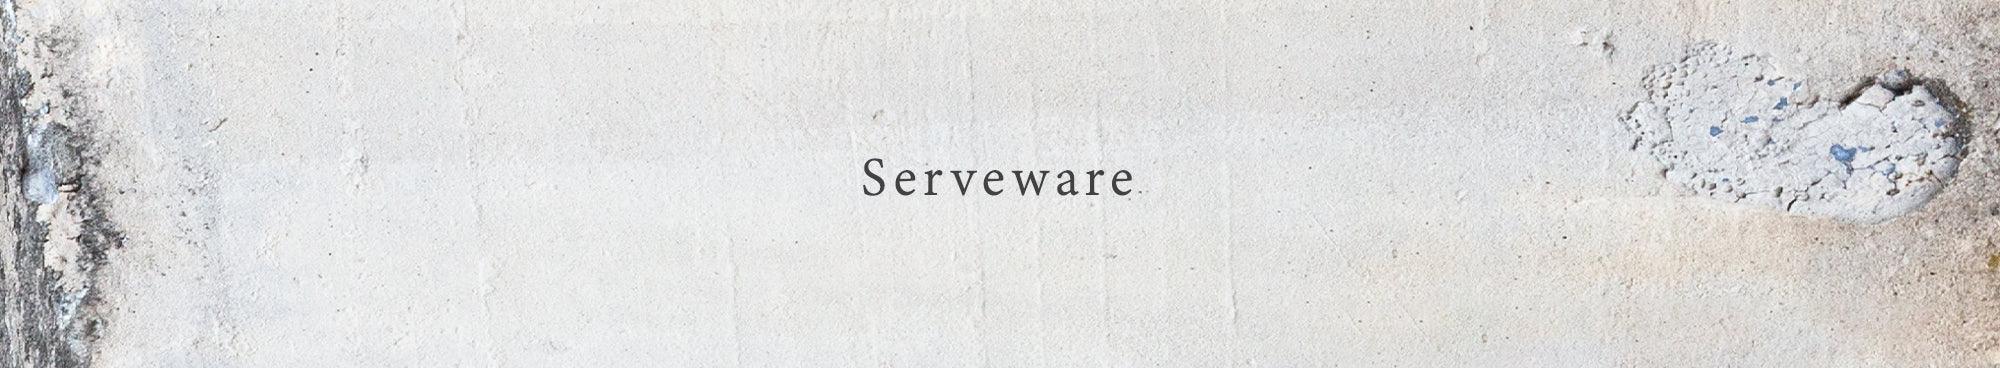 Serveware